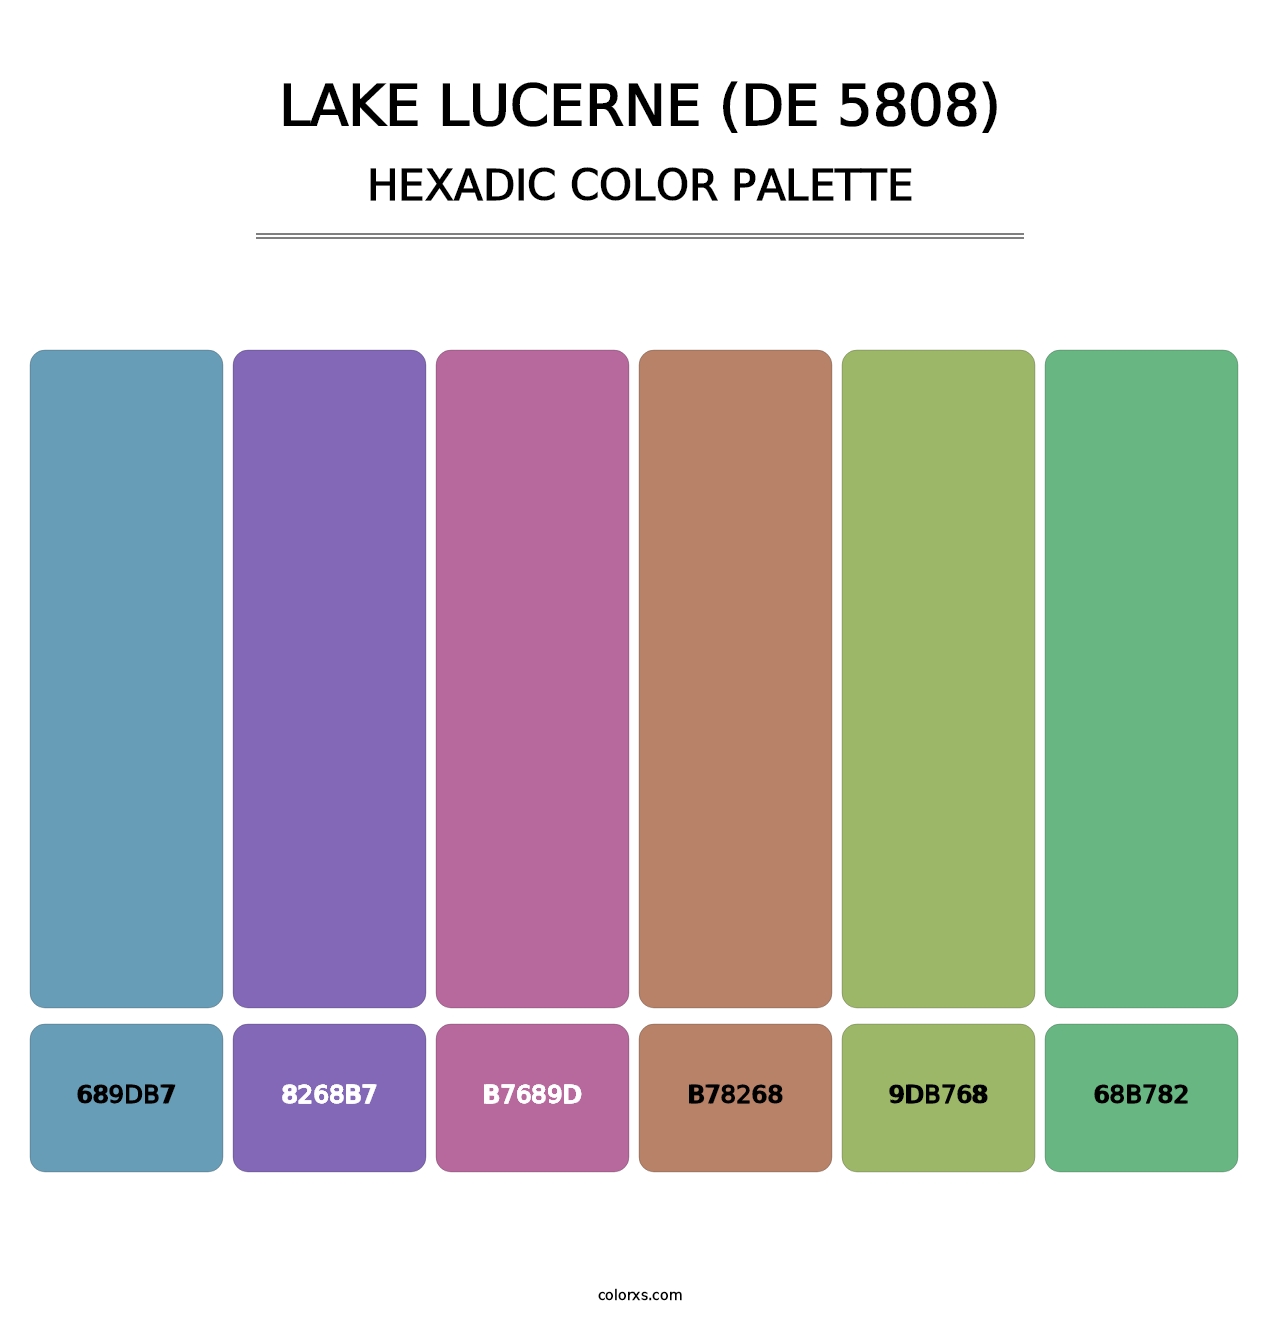 Lake Lucerne (DE 5808) - Hexadic Color Palette